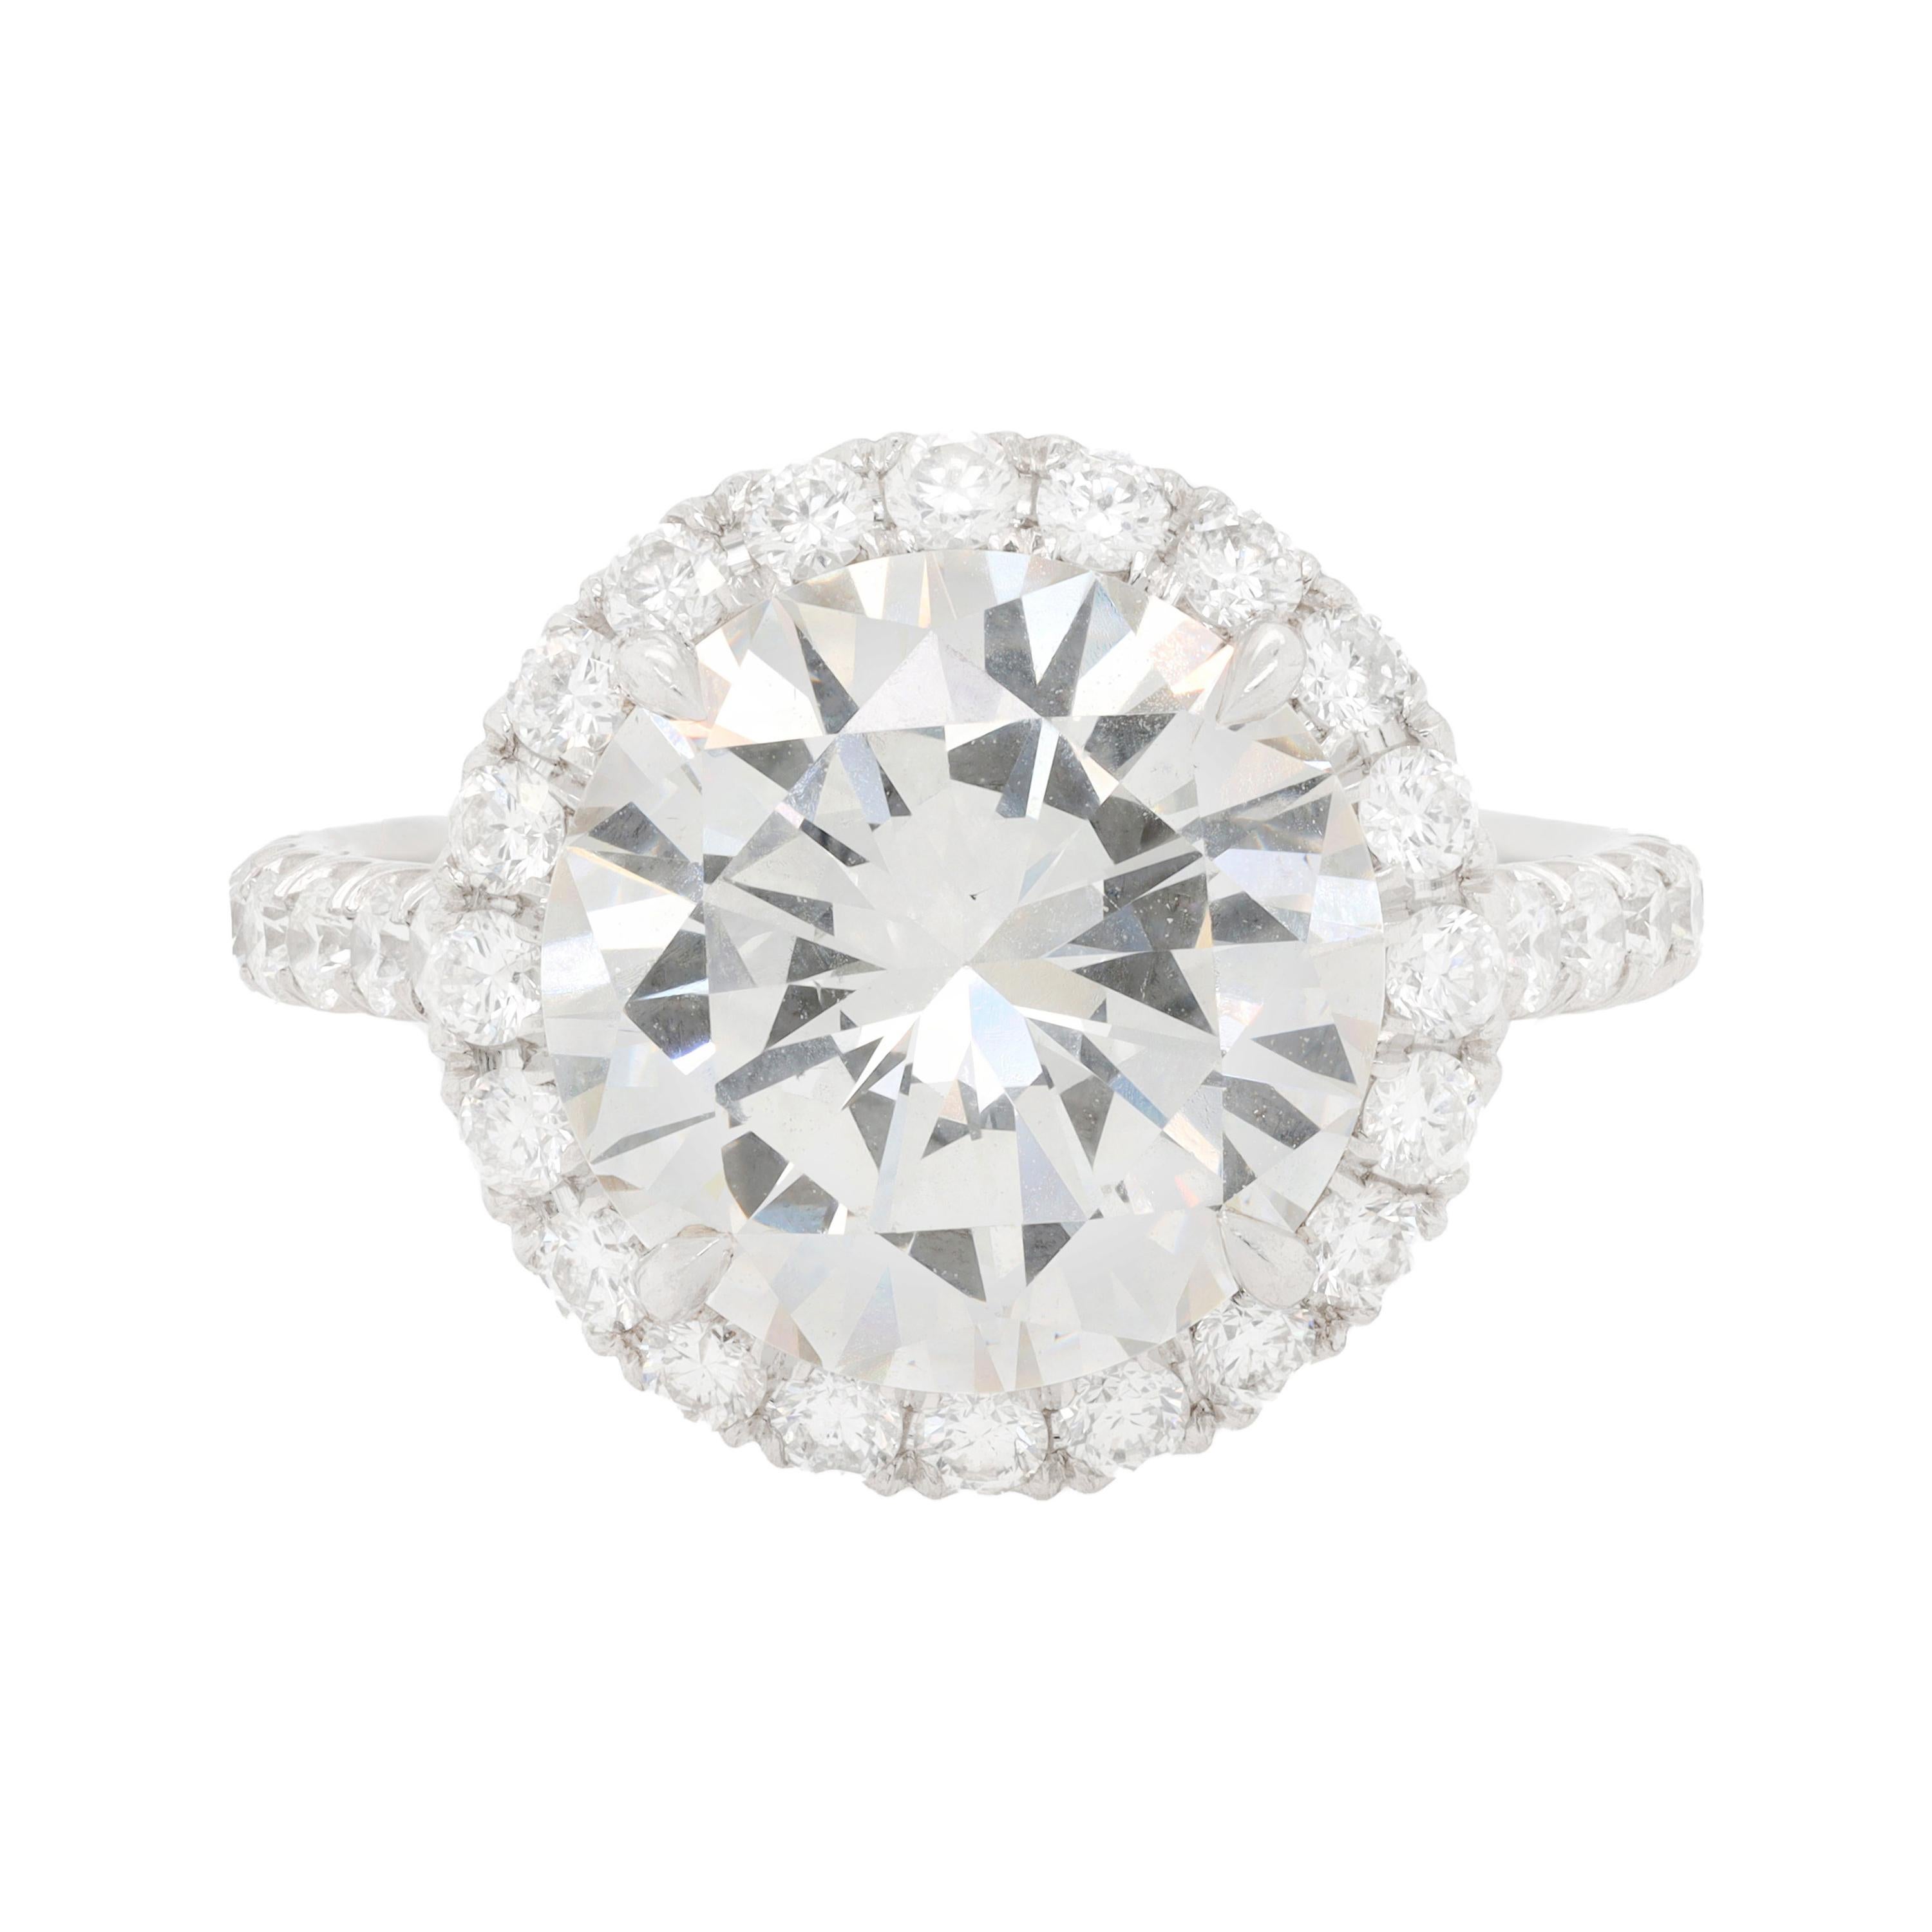 4.54 Carat Diamond Ring in Platinum Setting with Micropave Diamonds